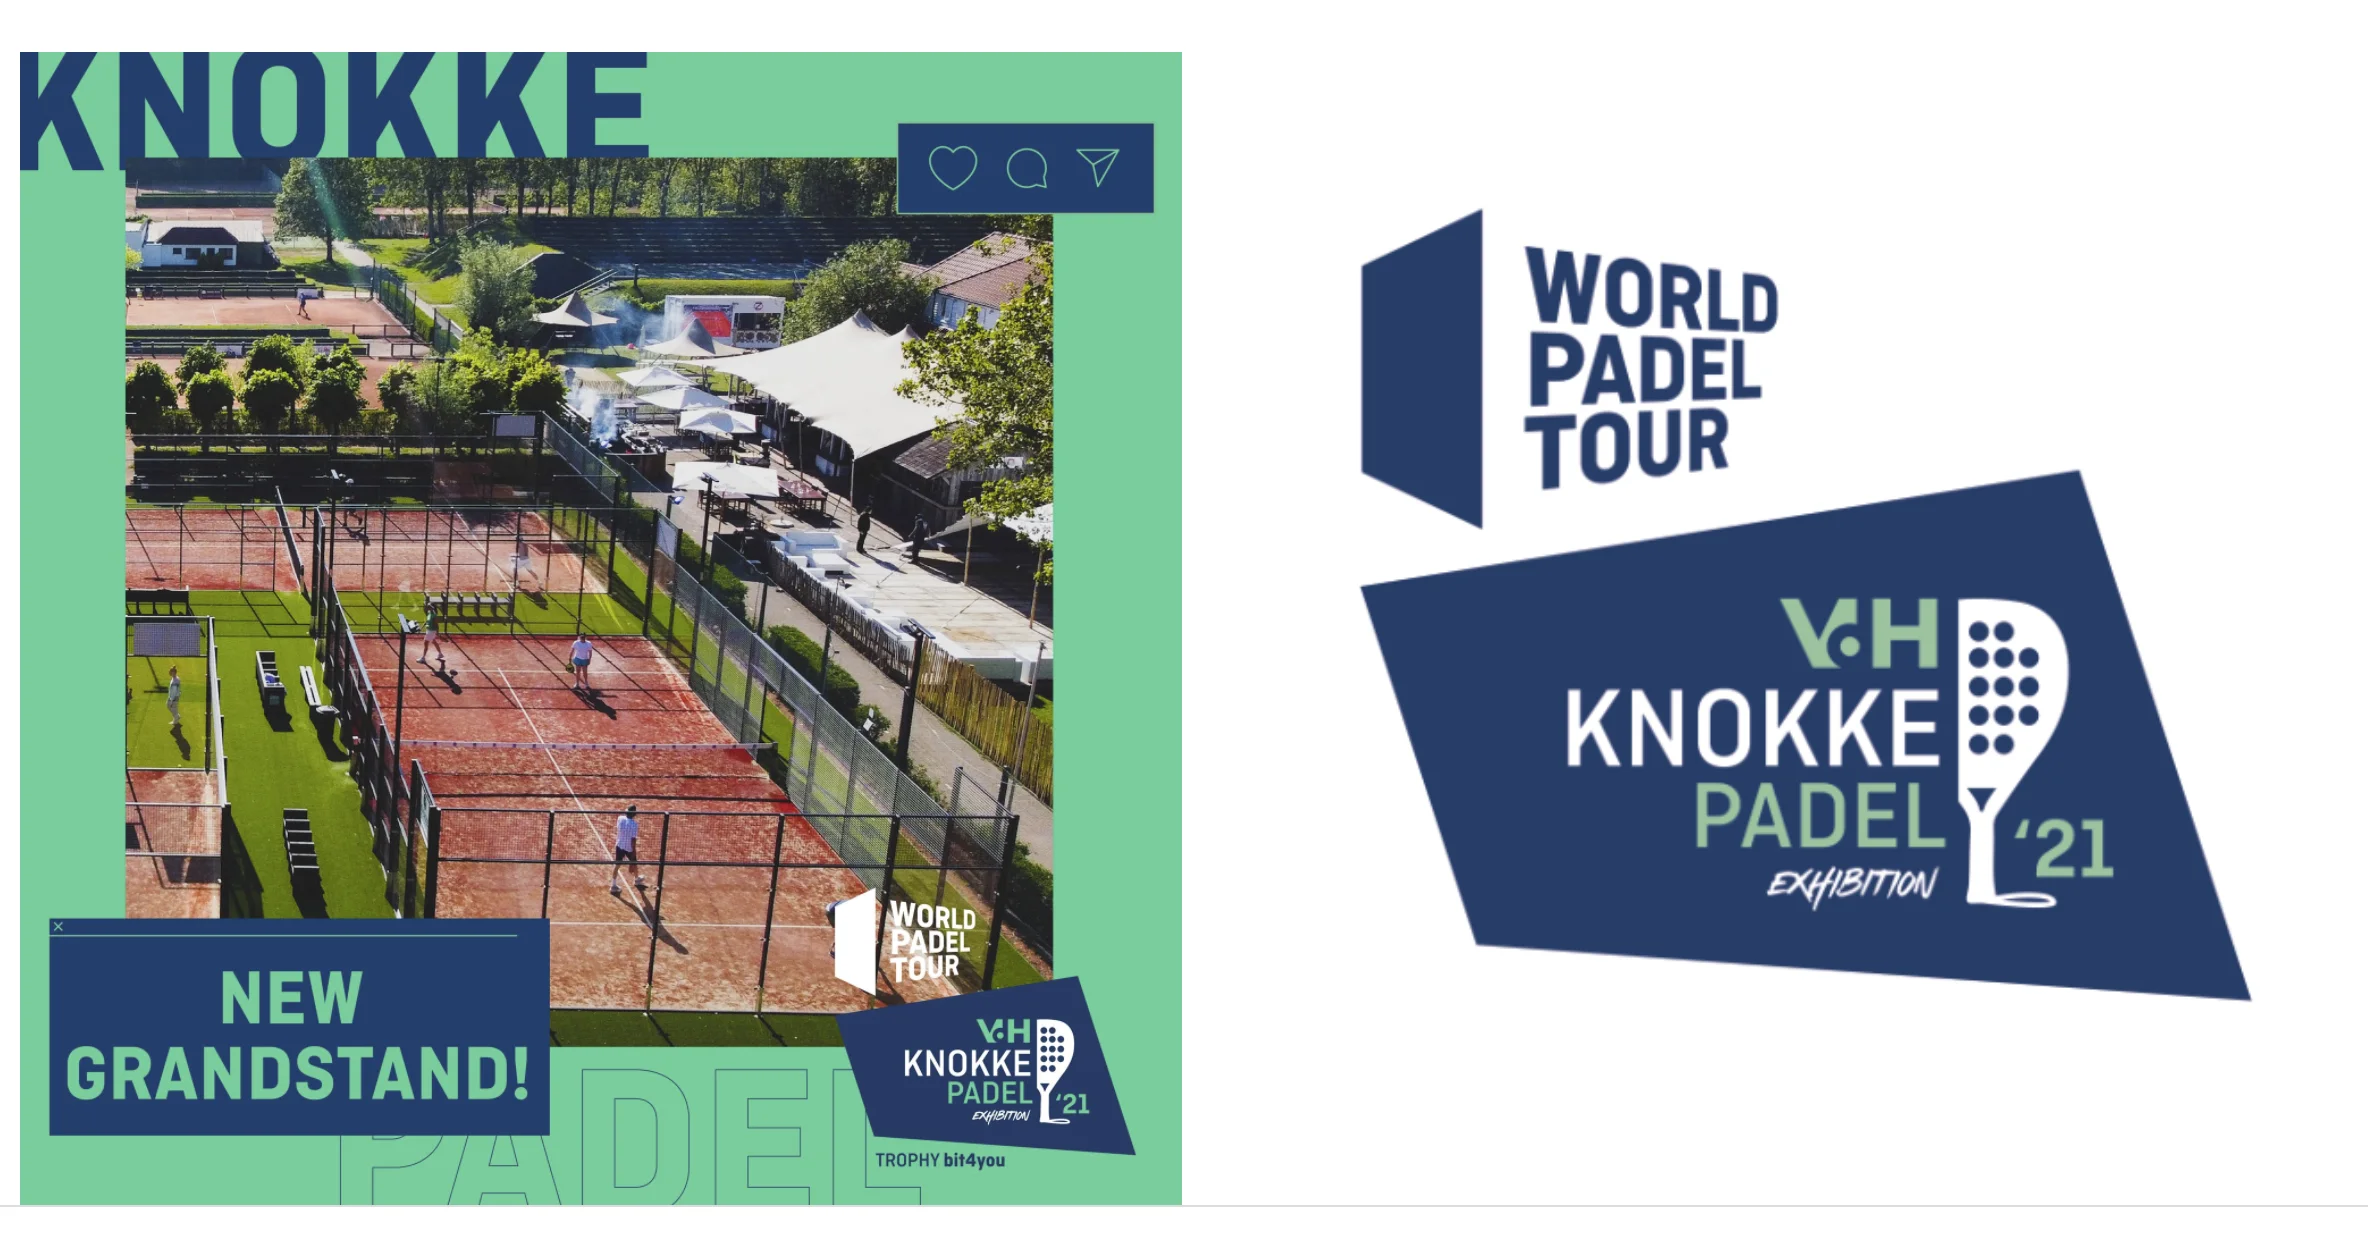 World Padel Tour Knokke 2021